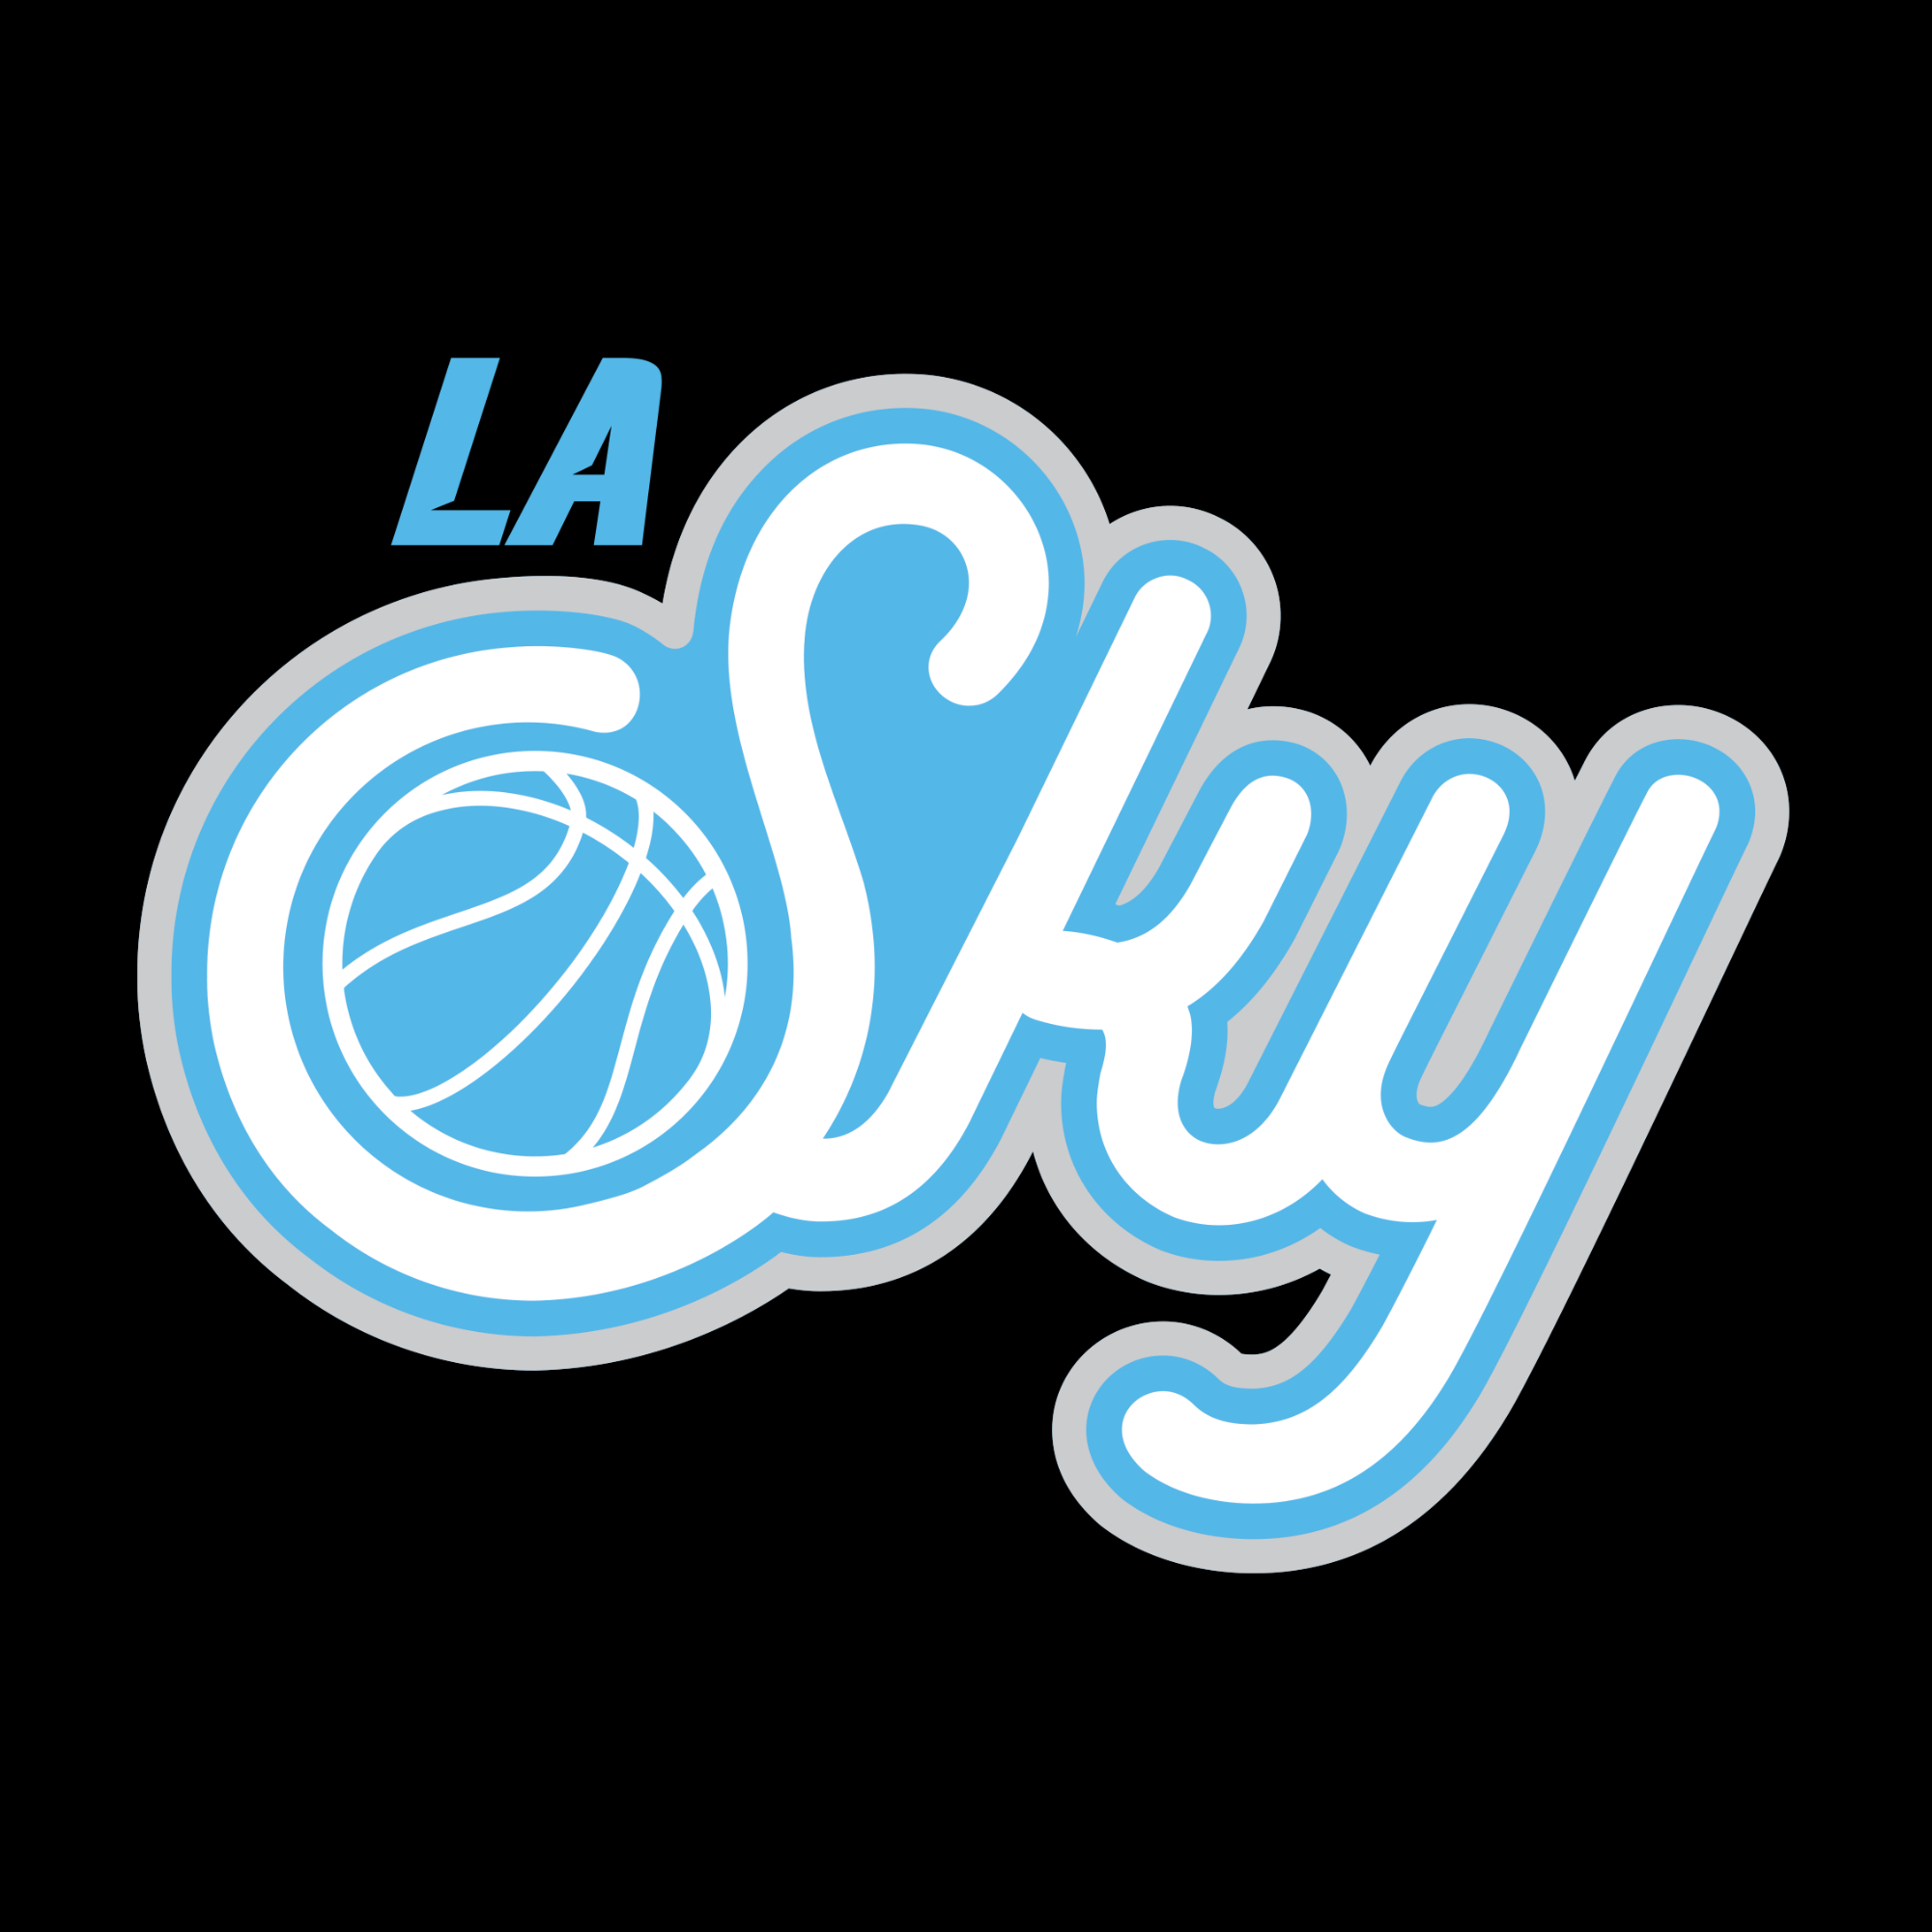 The official logo of LA Sky